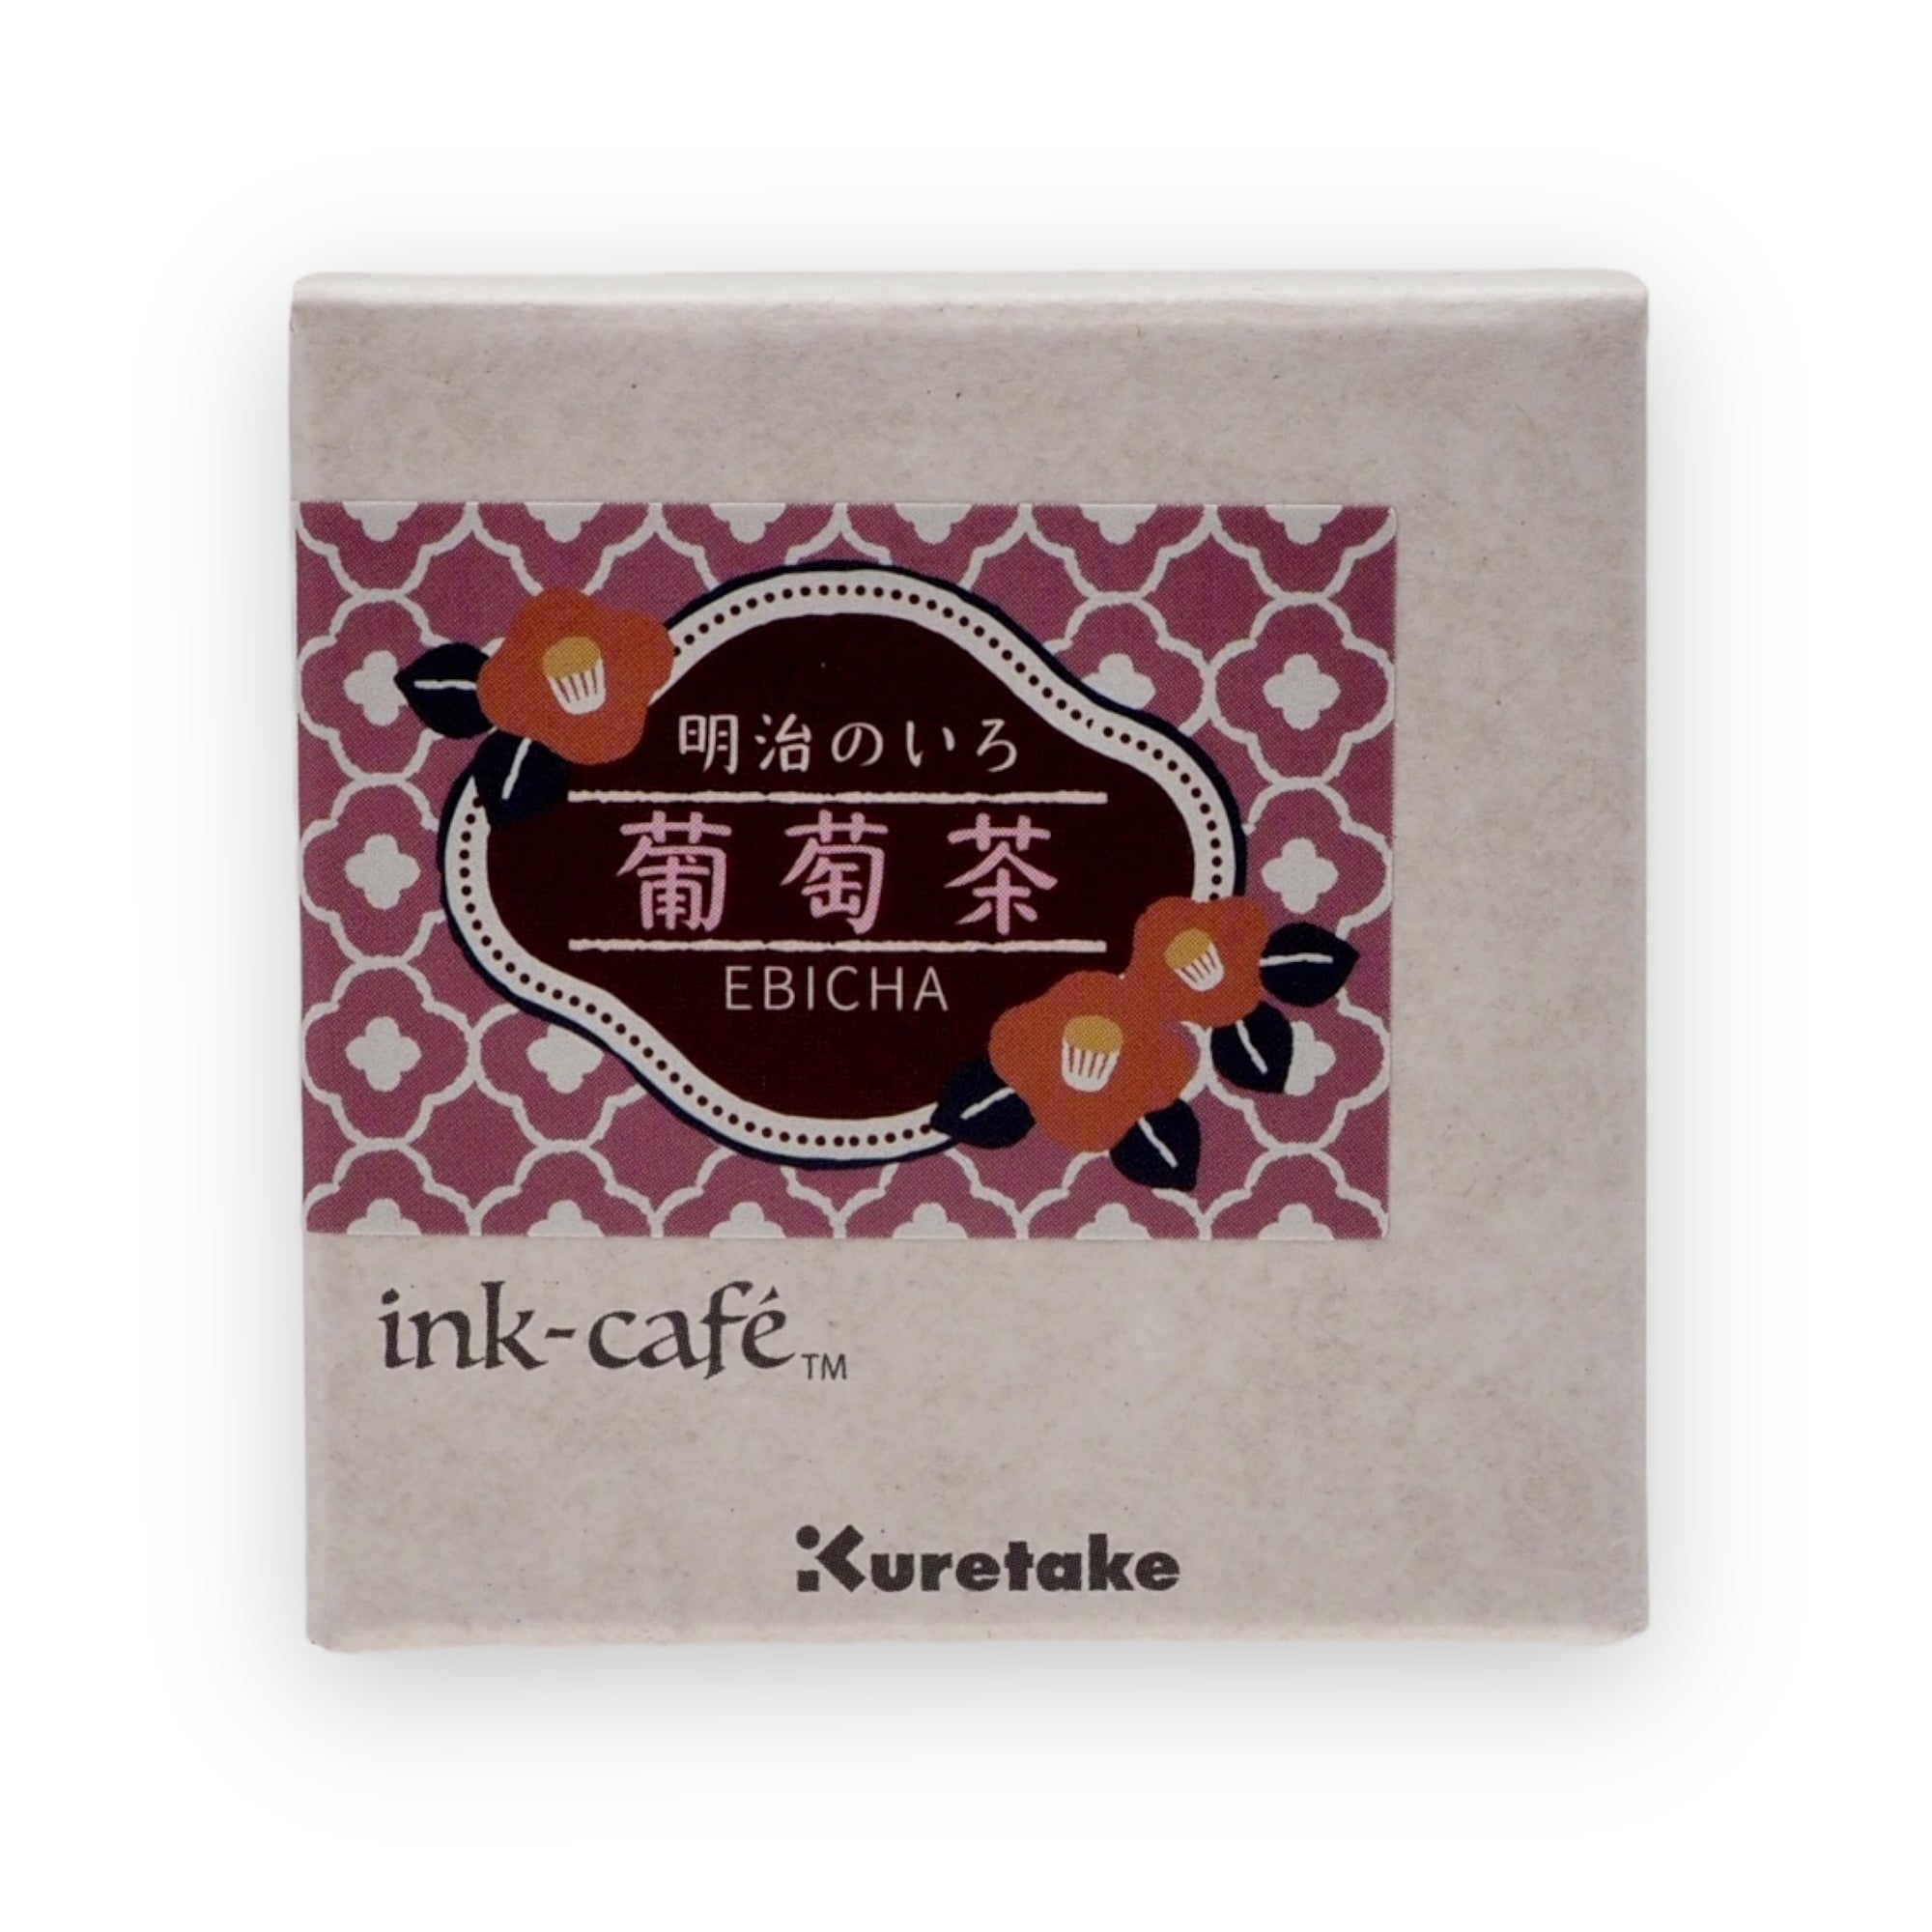 Kuretake - Ink Cafe Ebicha